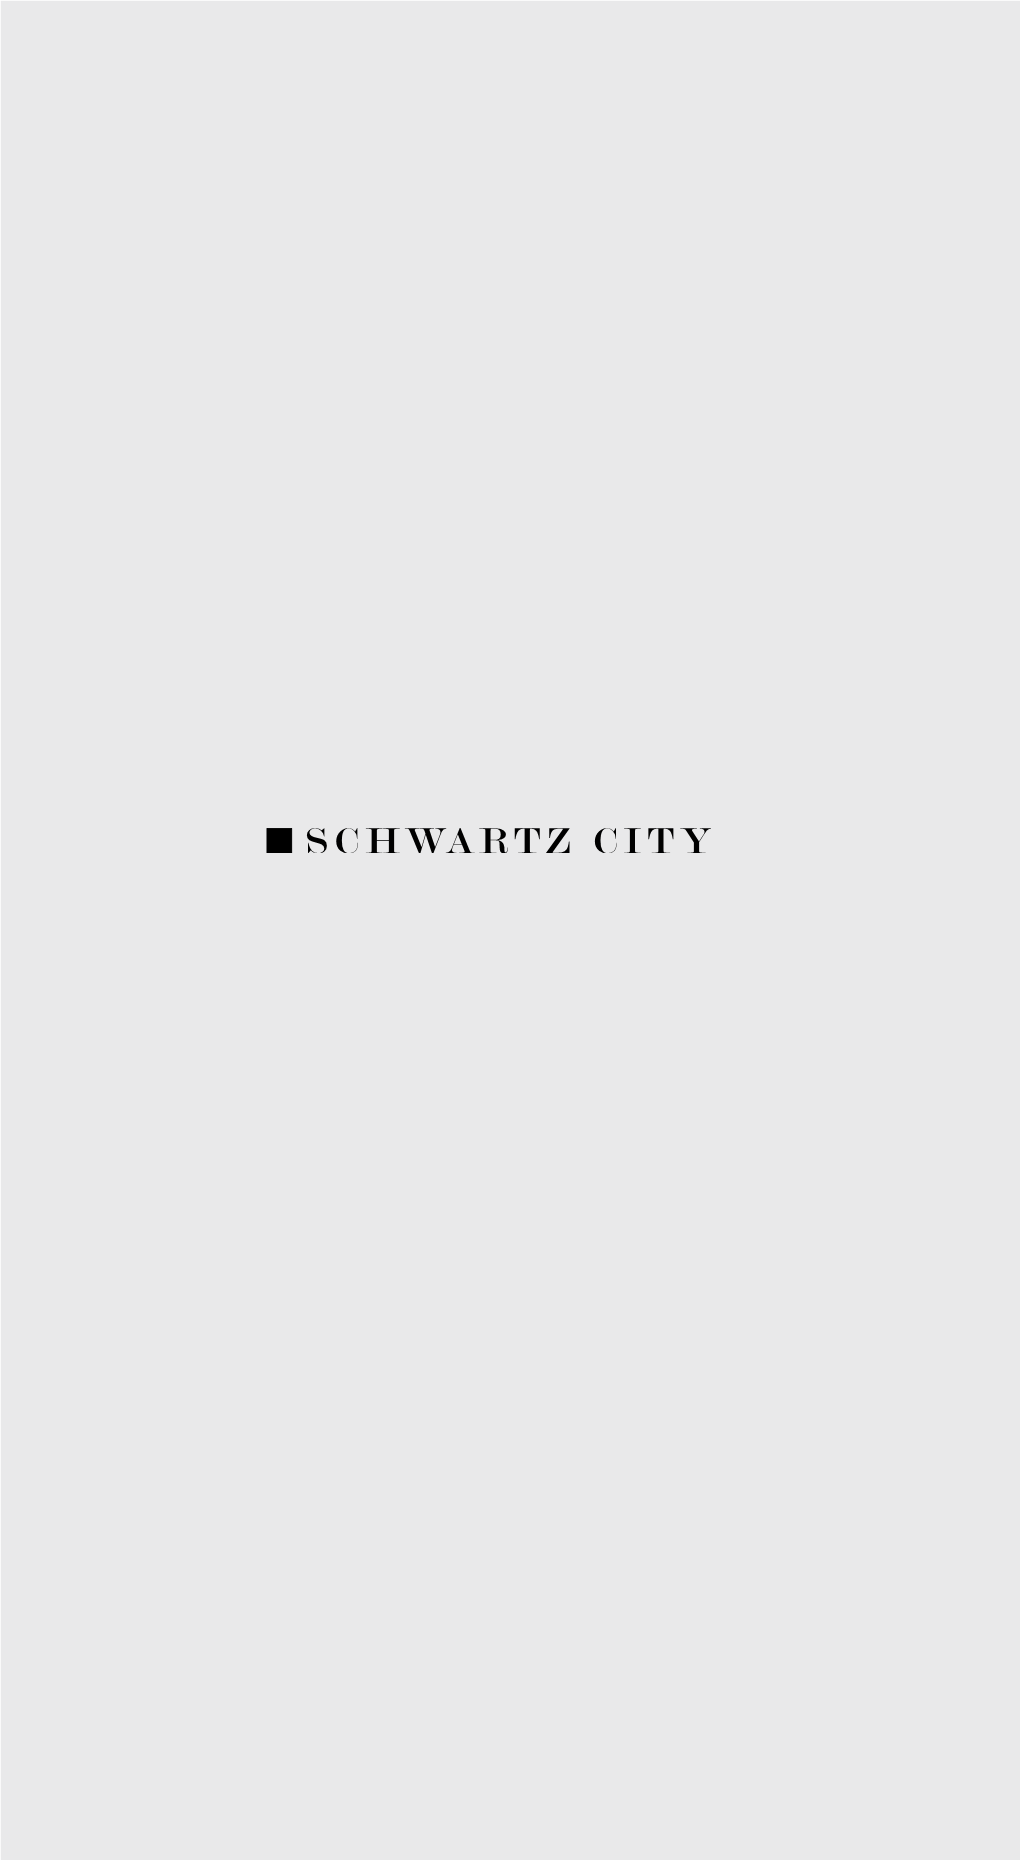 View the Schwartz City 2019 Catalogue